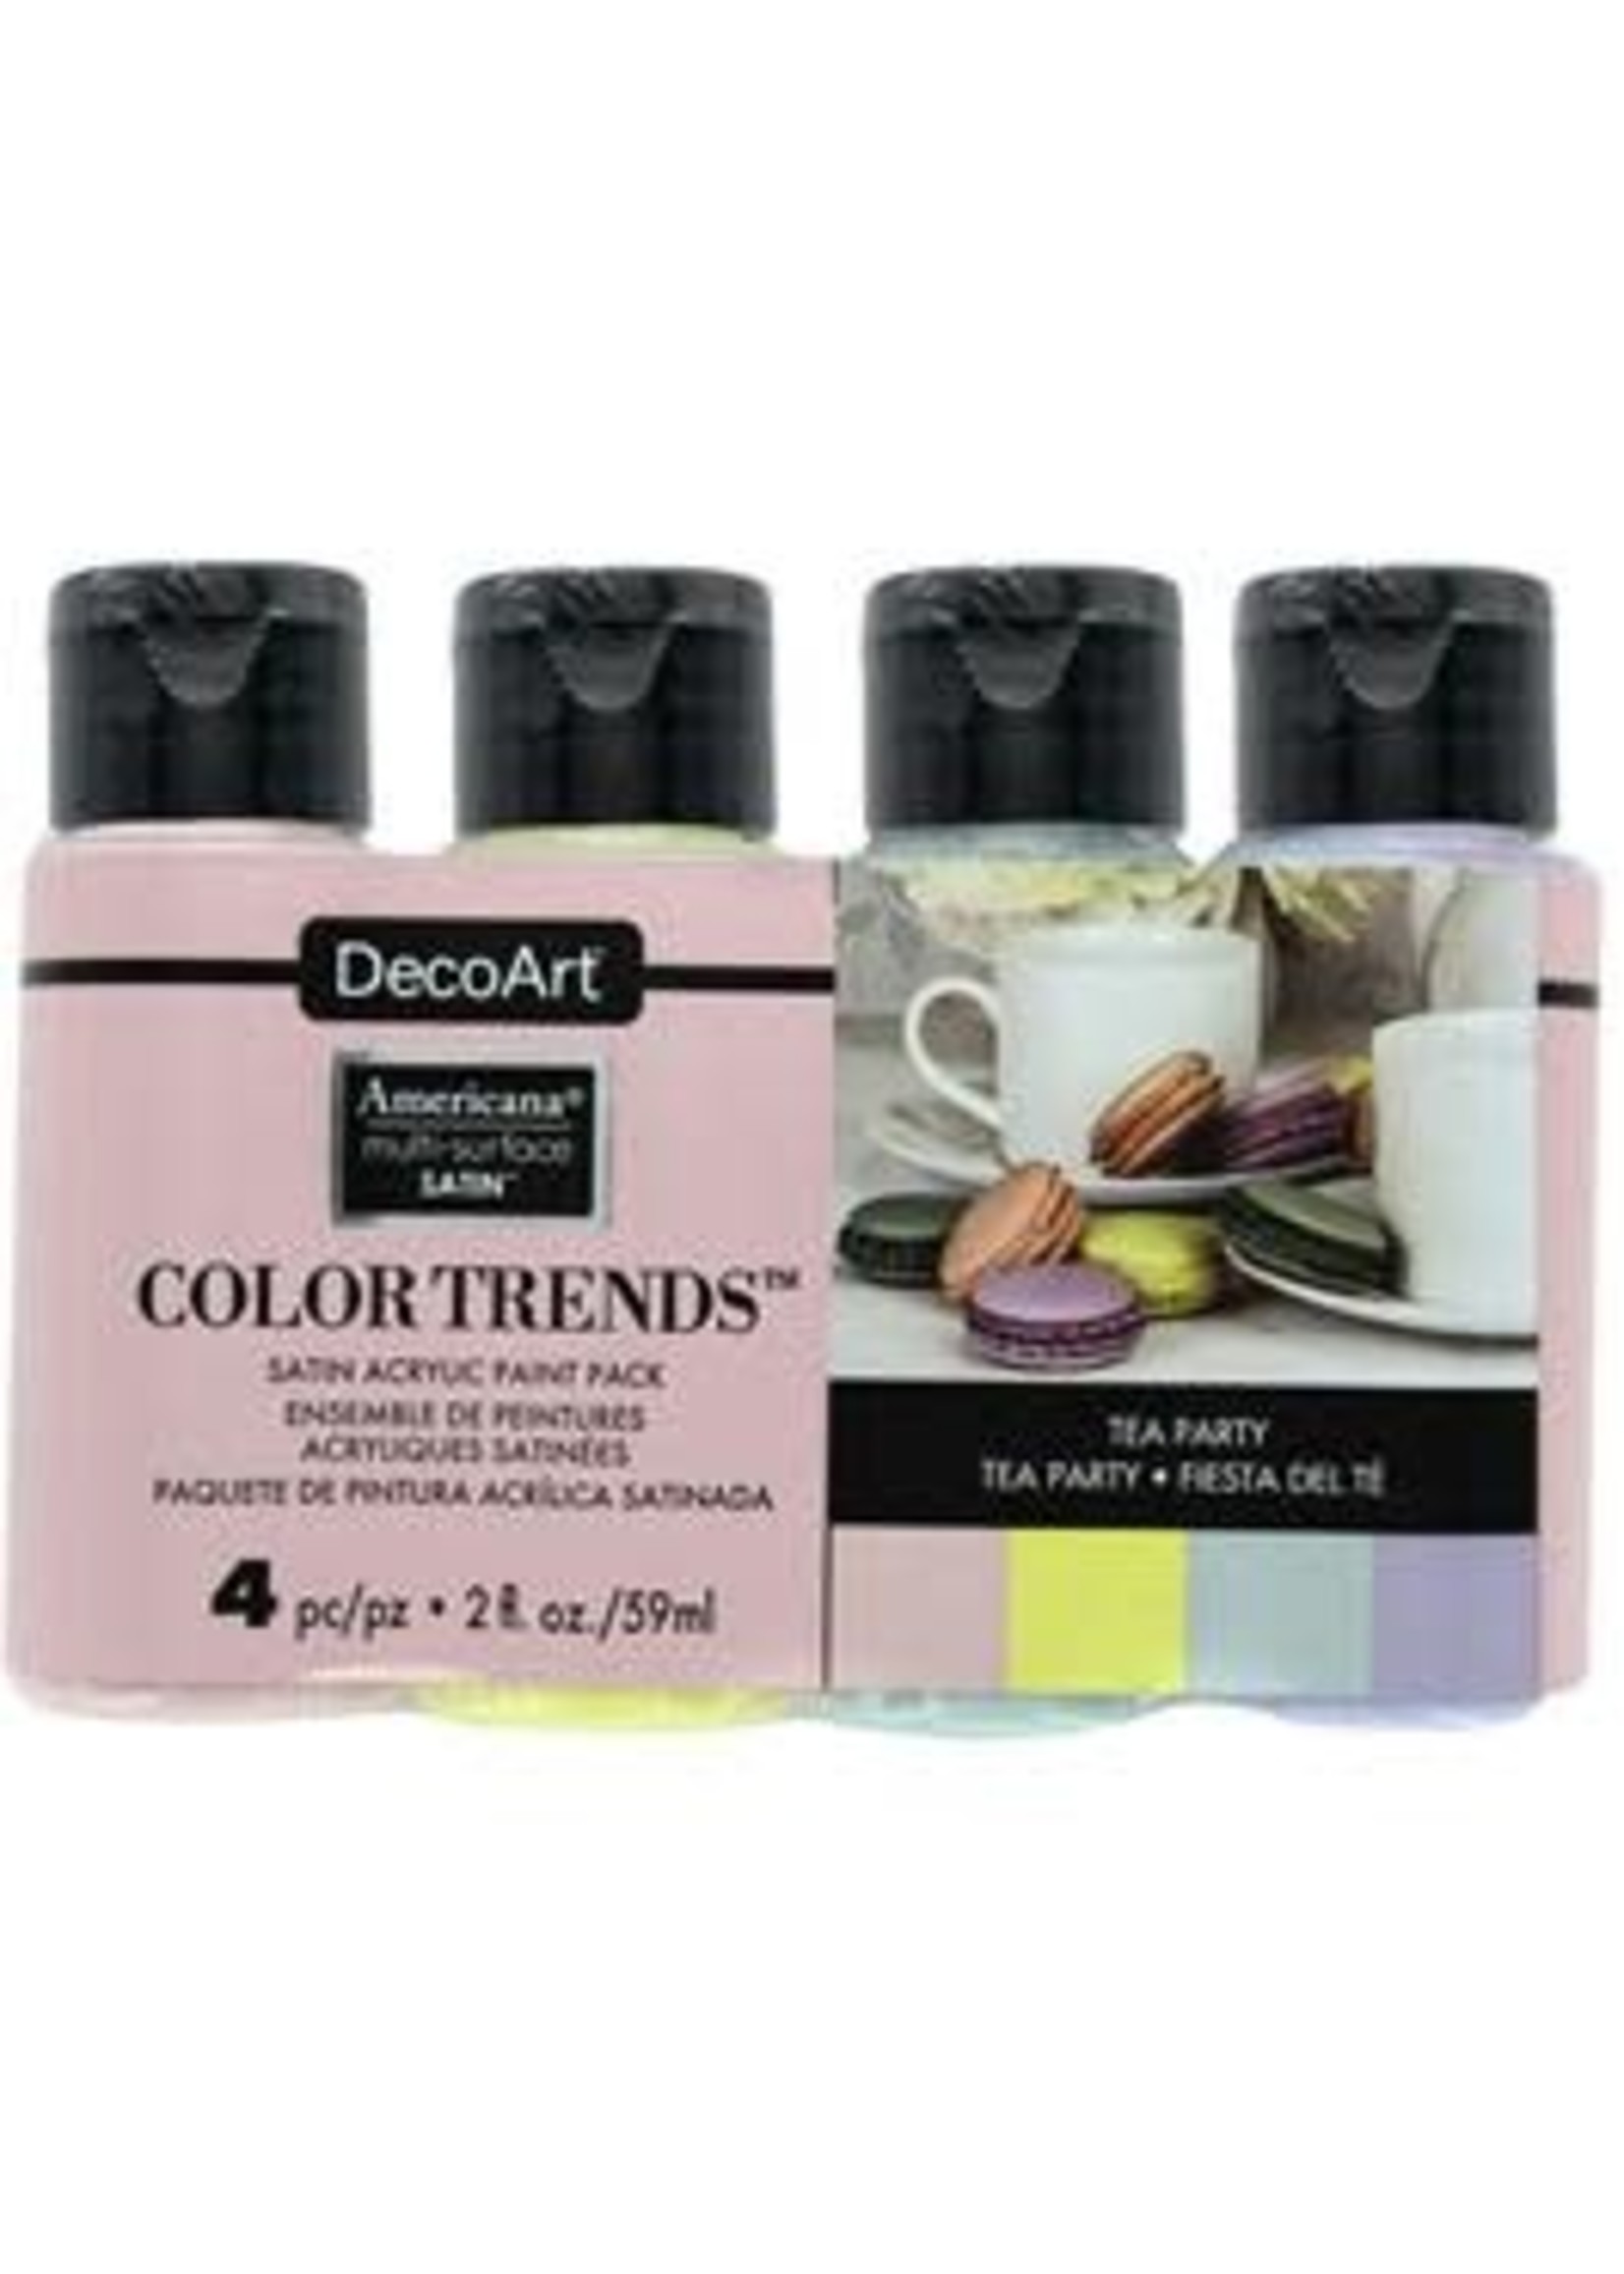 DecoArt Multi Surface Acrylic Paint Satin Tea Party 4pc